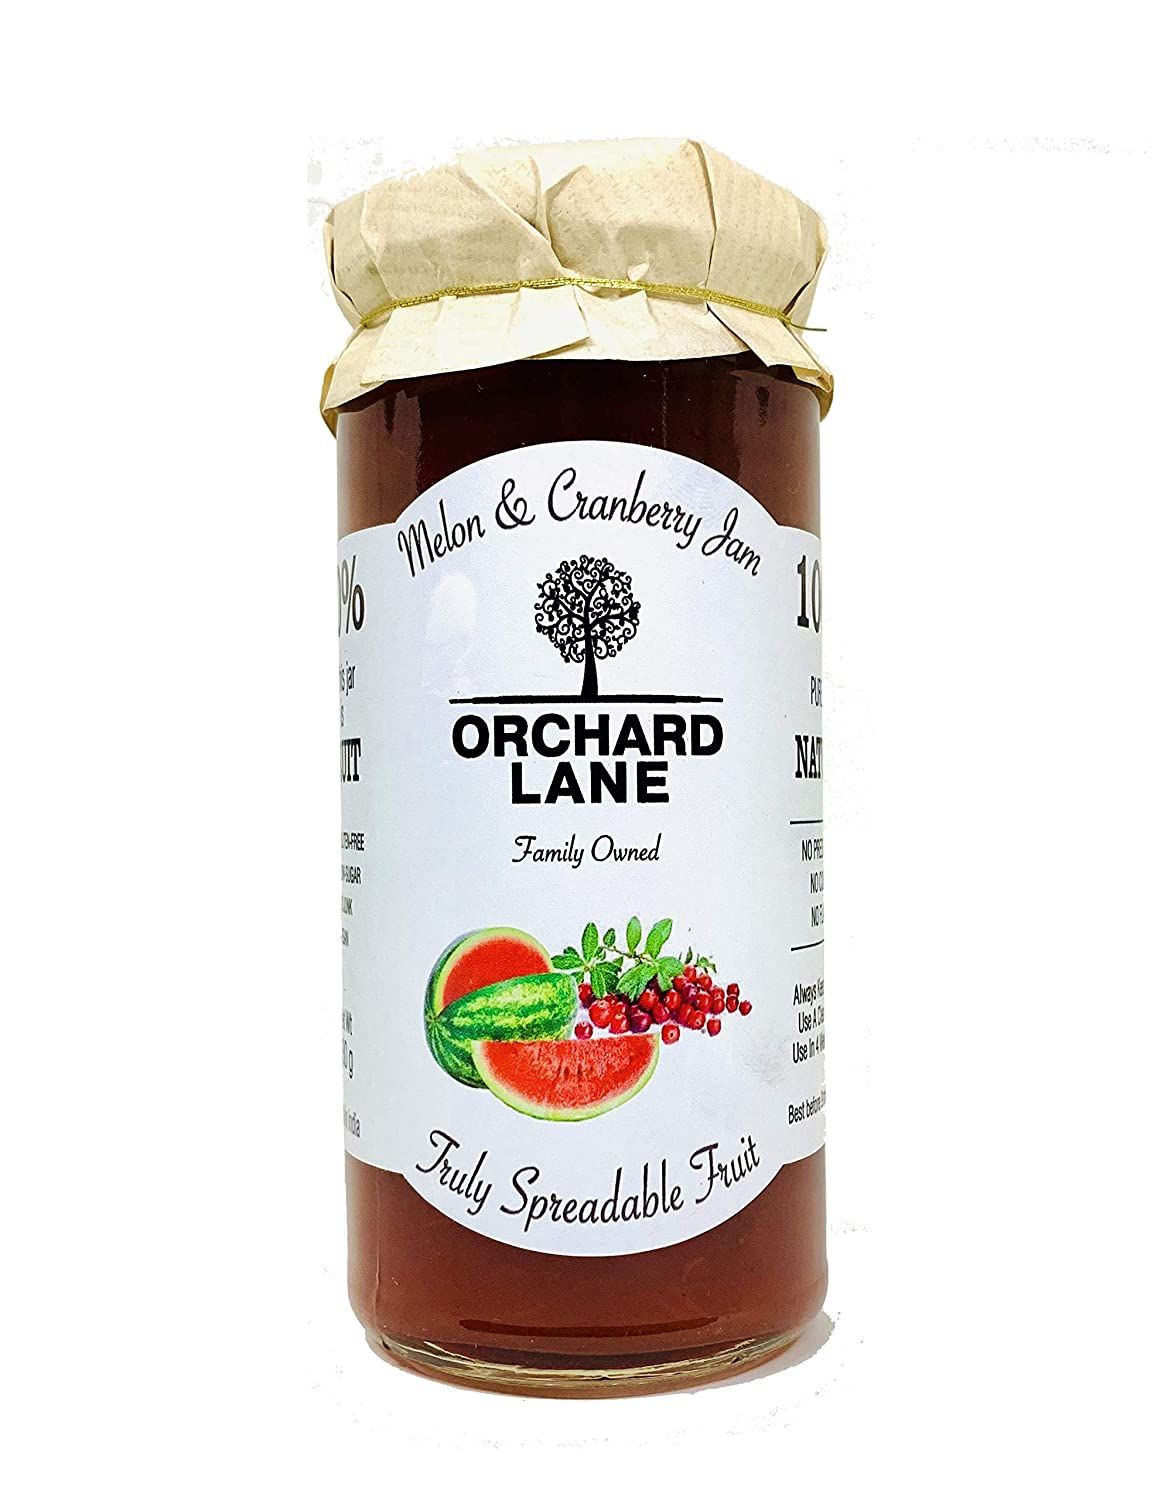 Orchard Lane Melon & Cranberry Jam Image